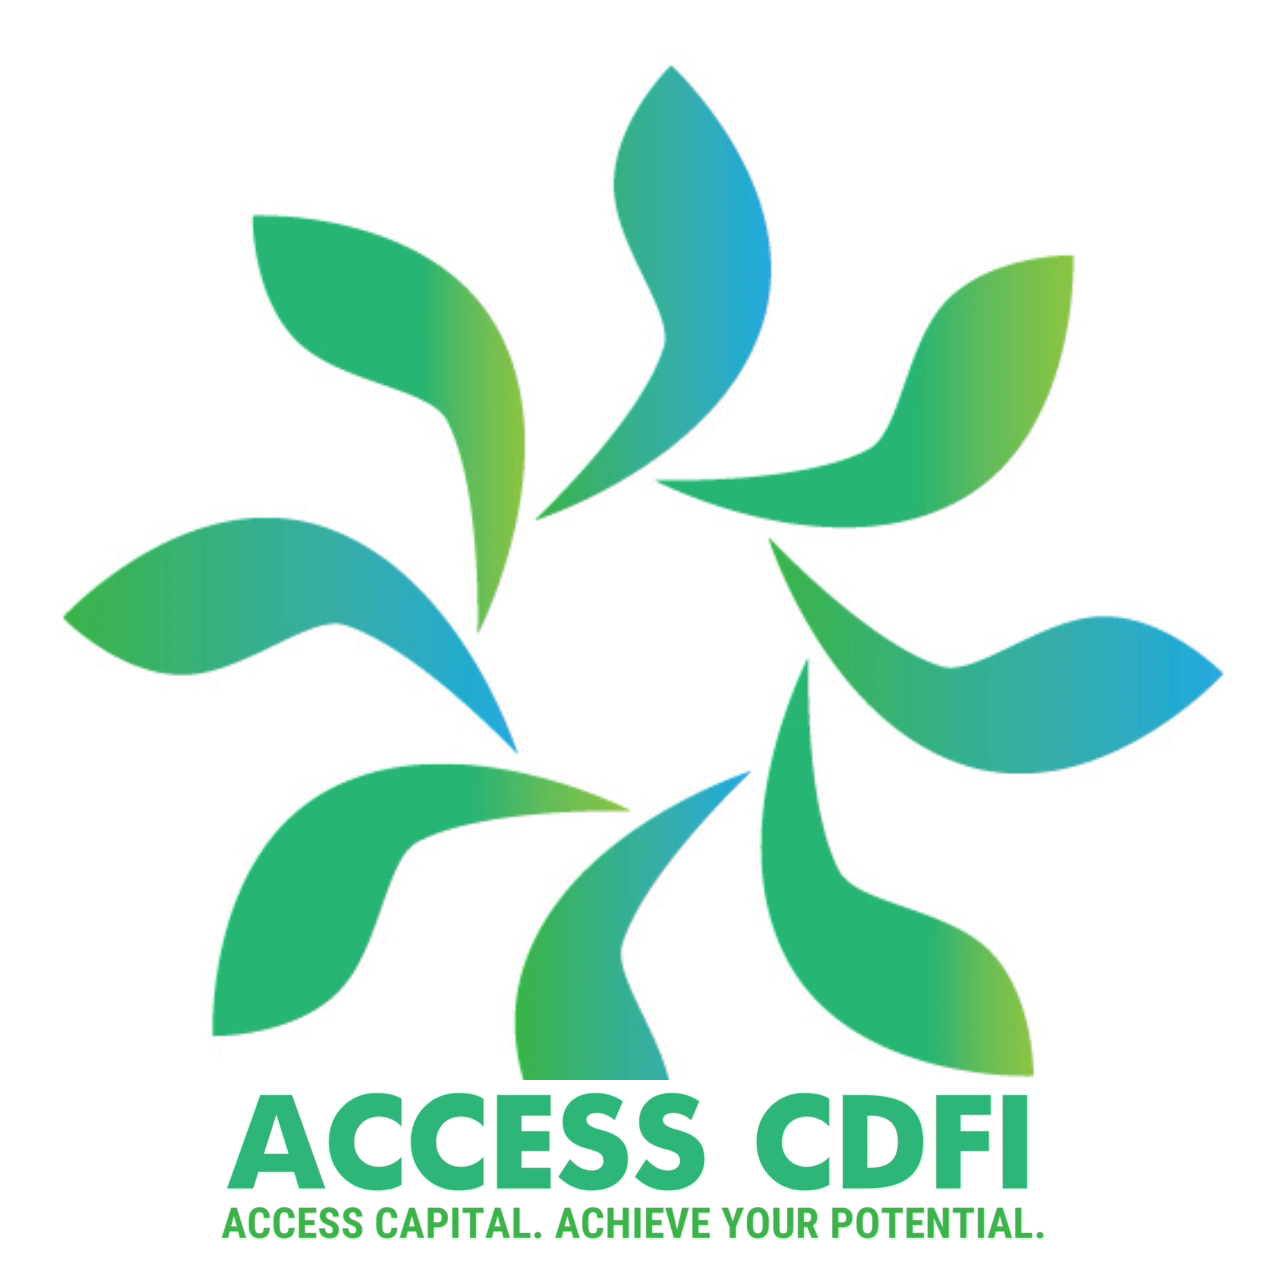 Access CDFI